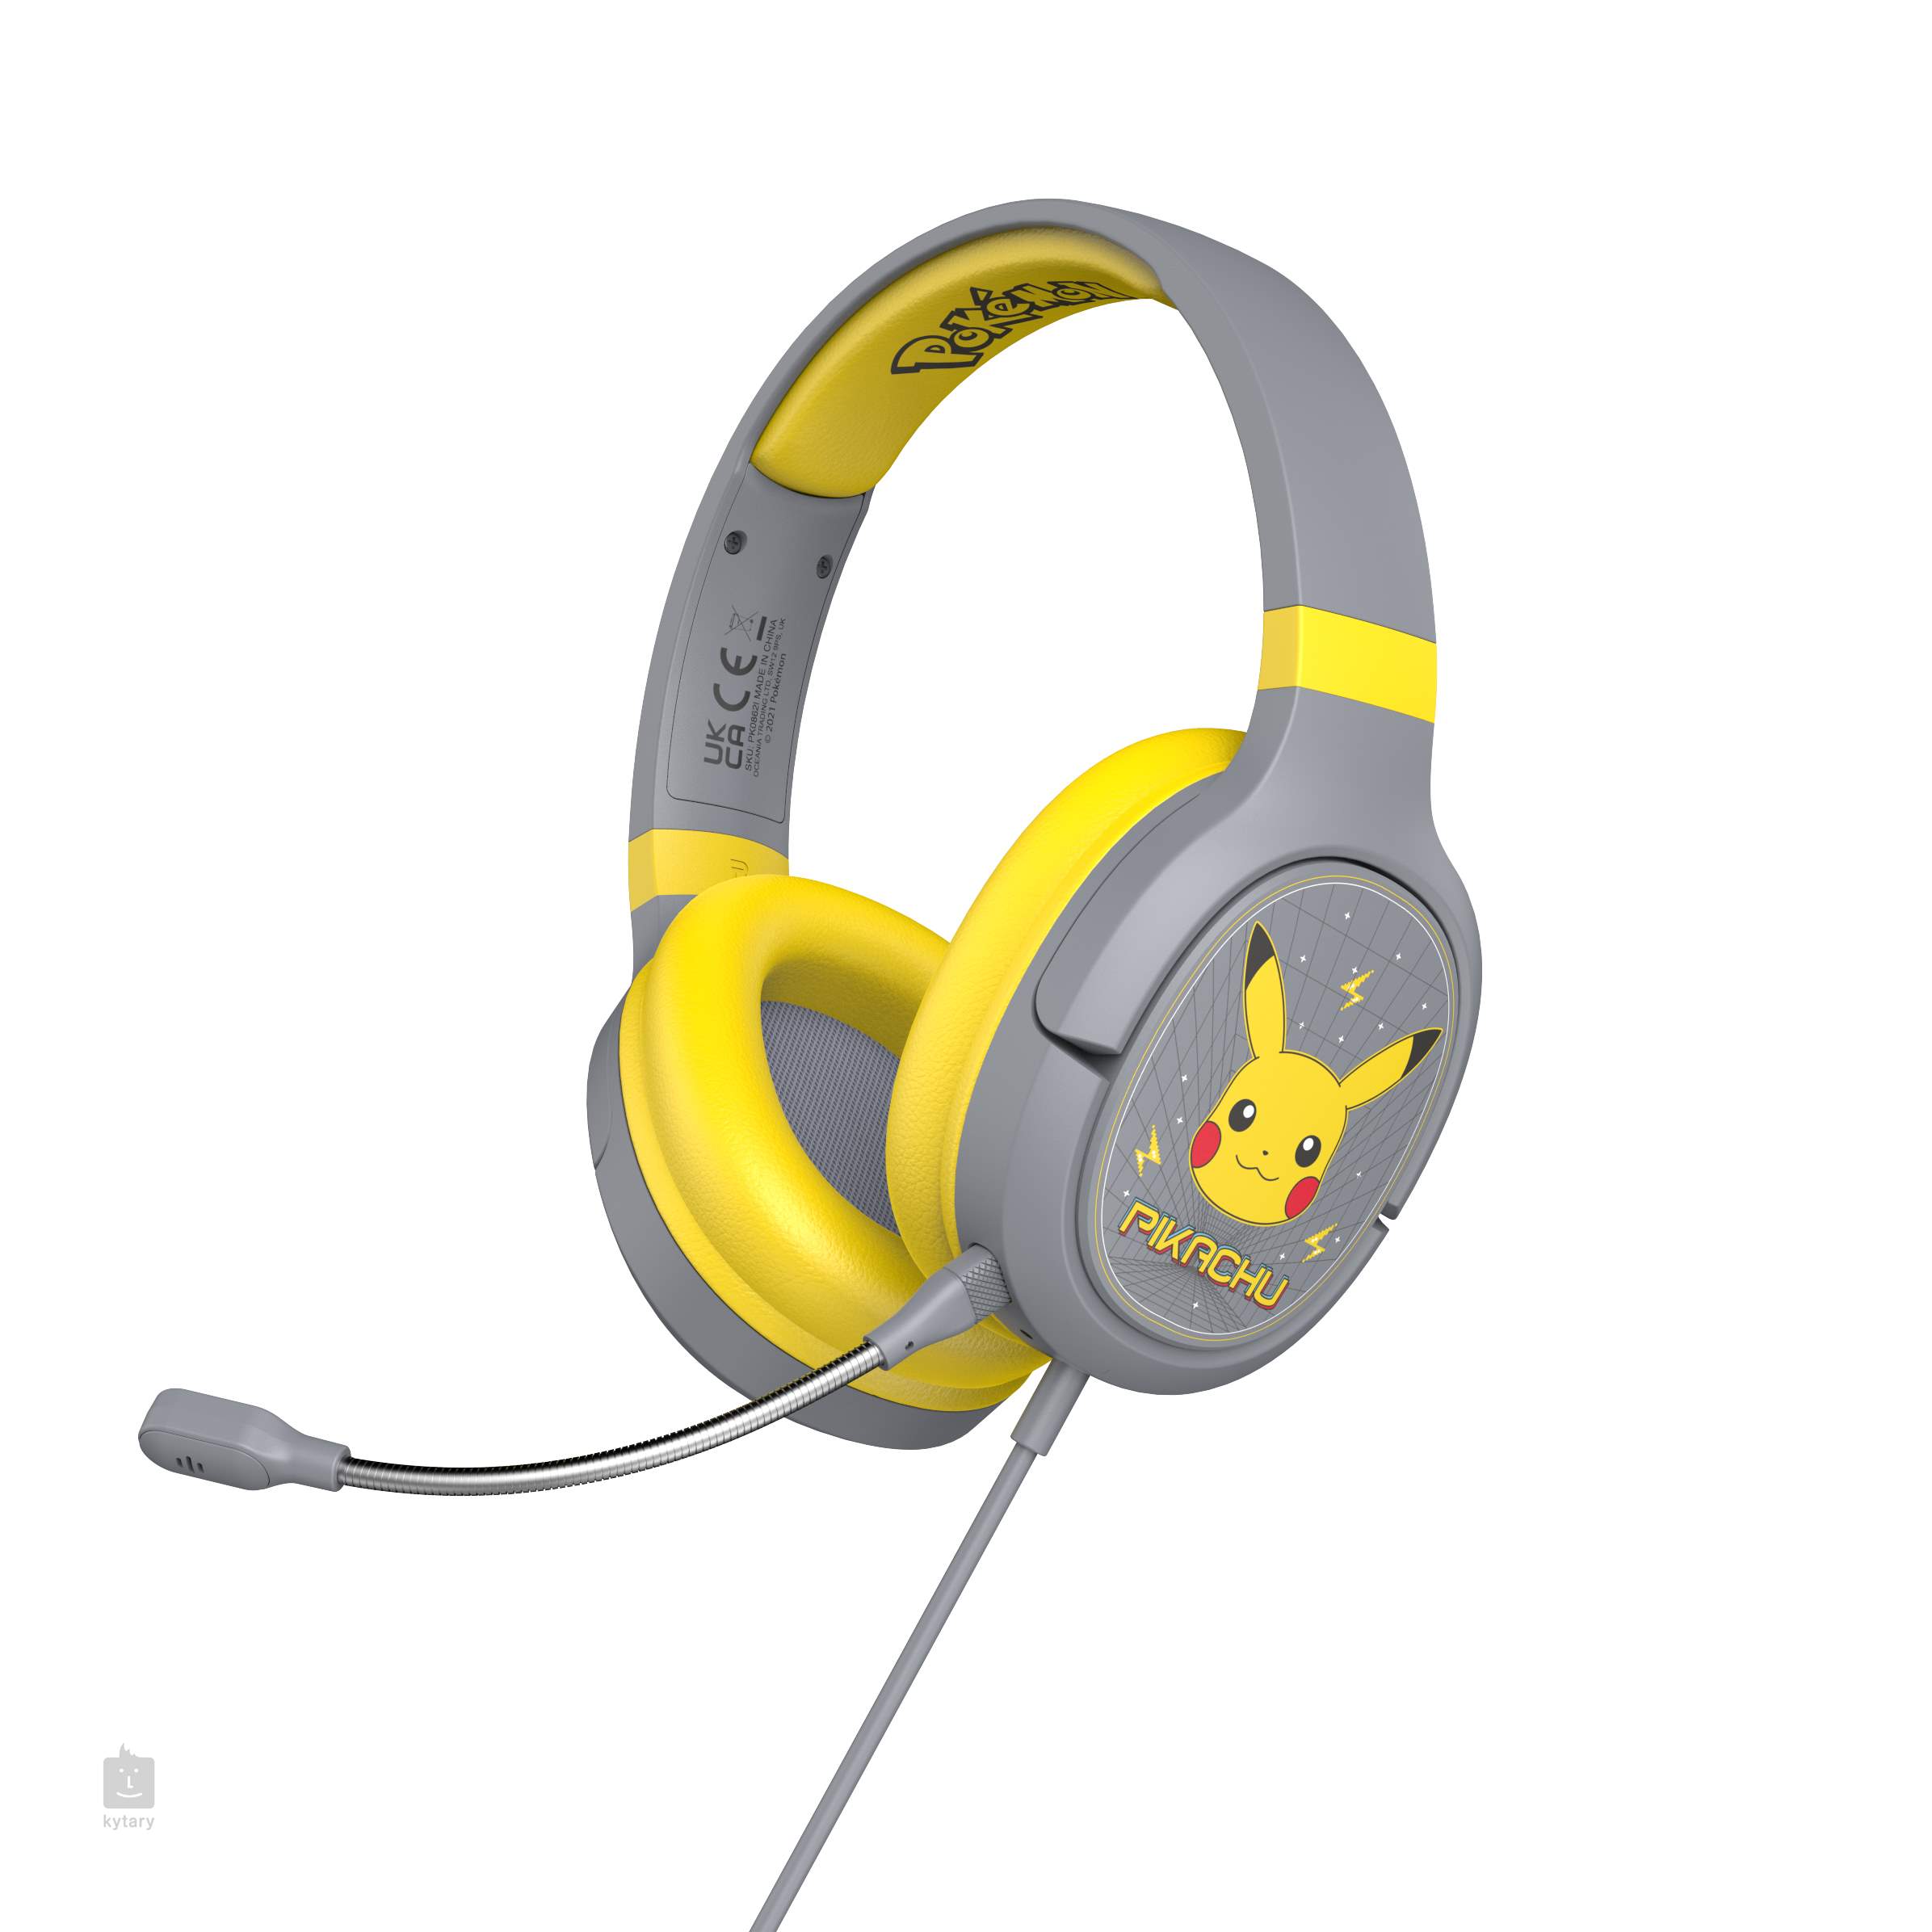 OTL Pokémon Pikachu PRO G1 Gaming Headphones Headphones